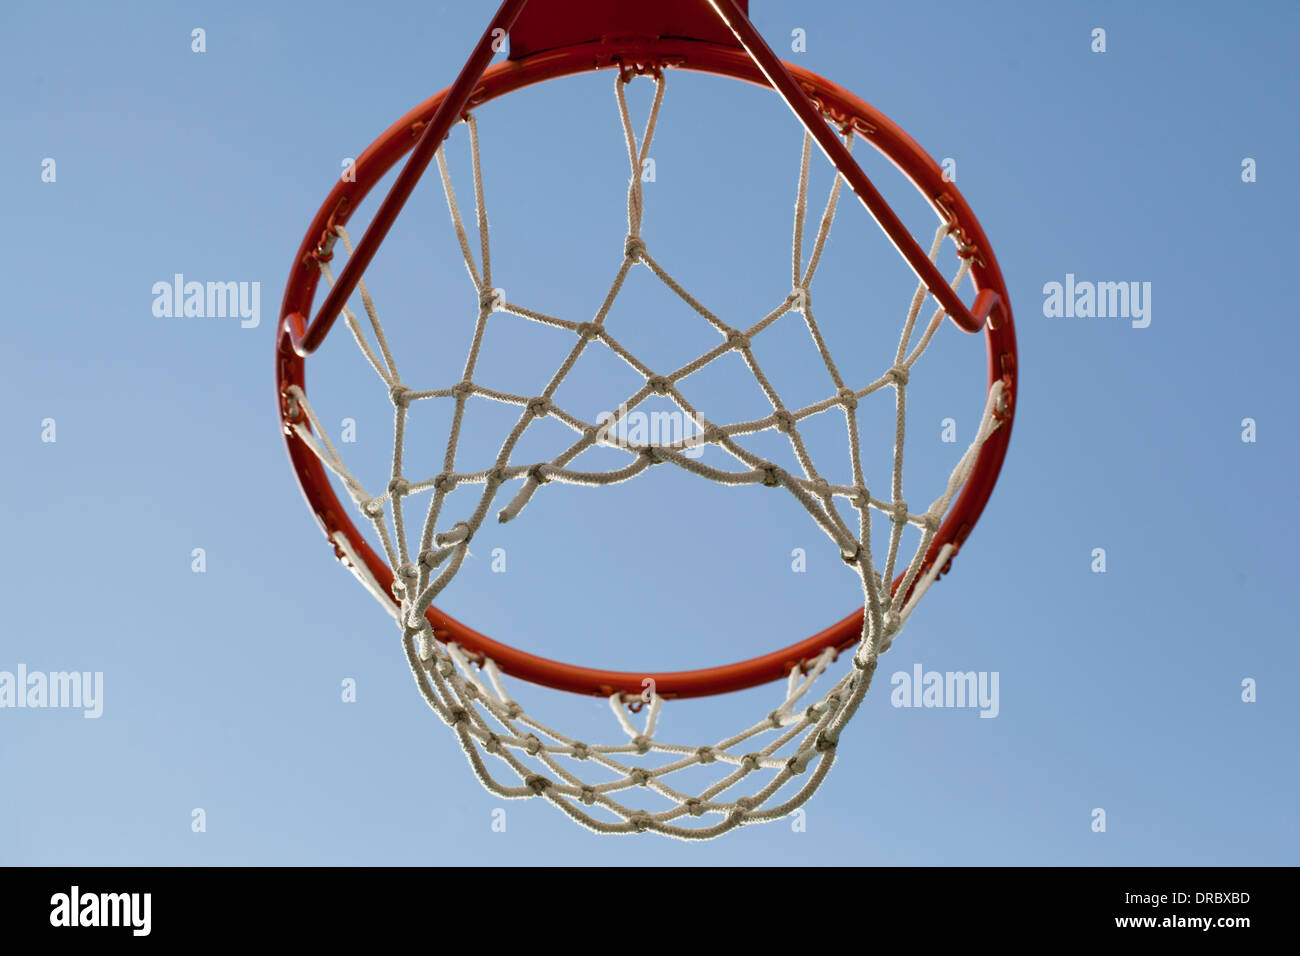 Basketball hoop in a blue sky Stock Photo